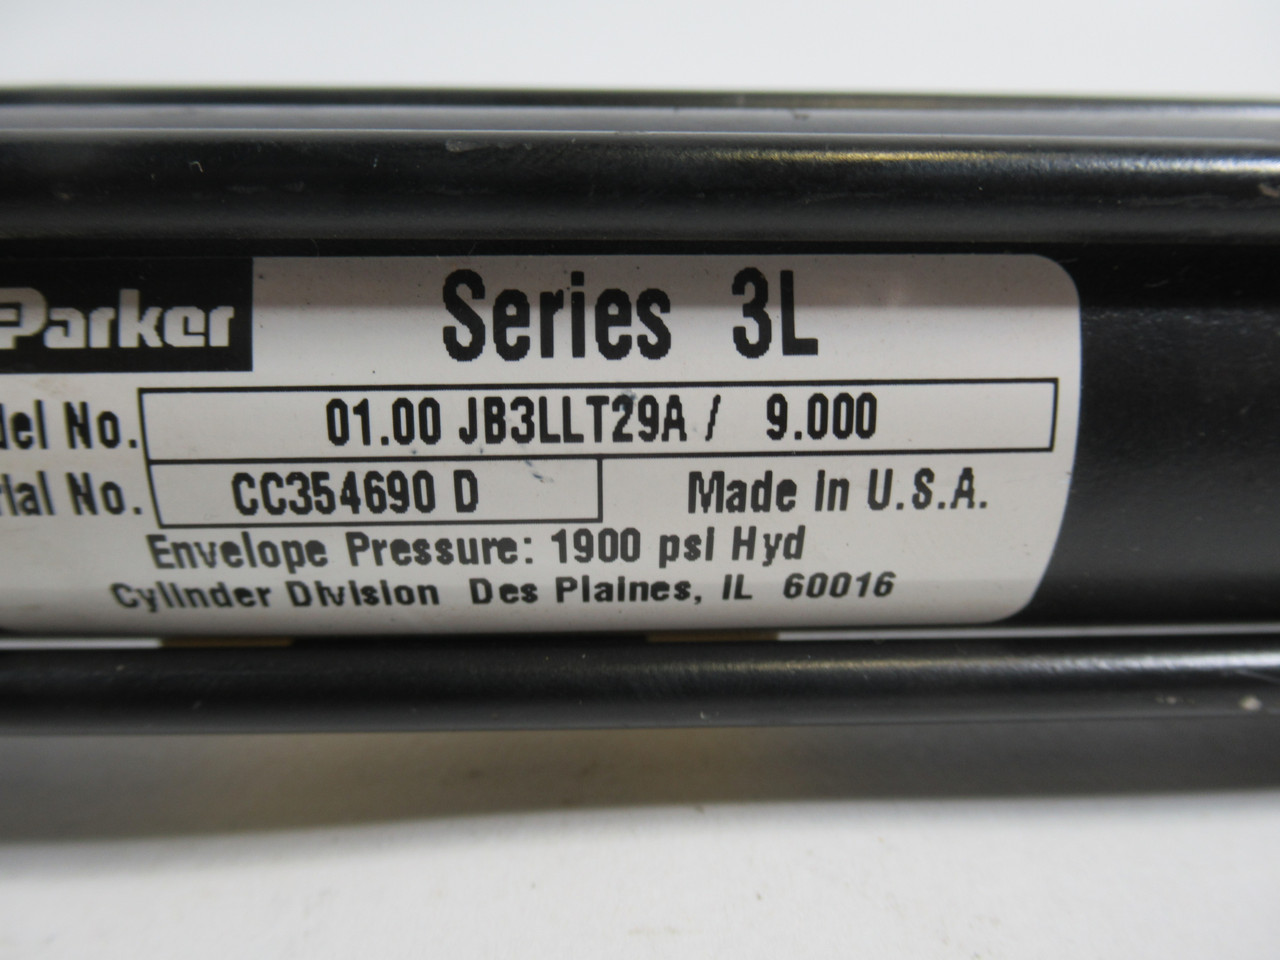 Parker 01.00-JB3LLT29A-9.000 Pneumatic Cylinder 1" Bore 9" Stroke !